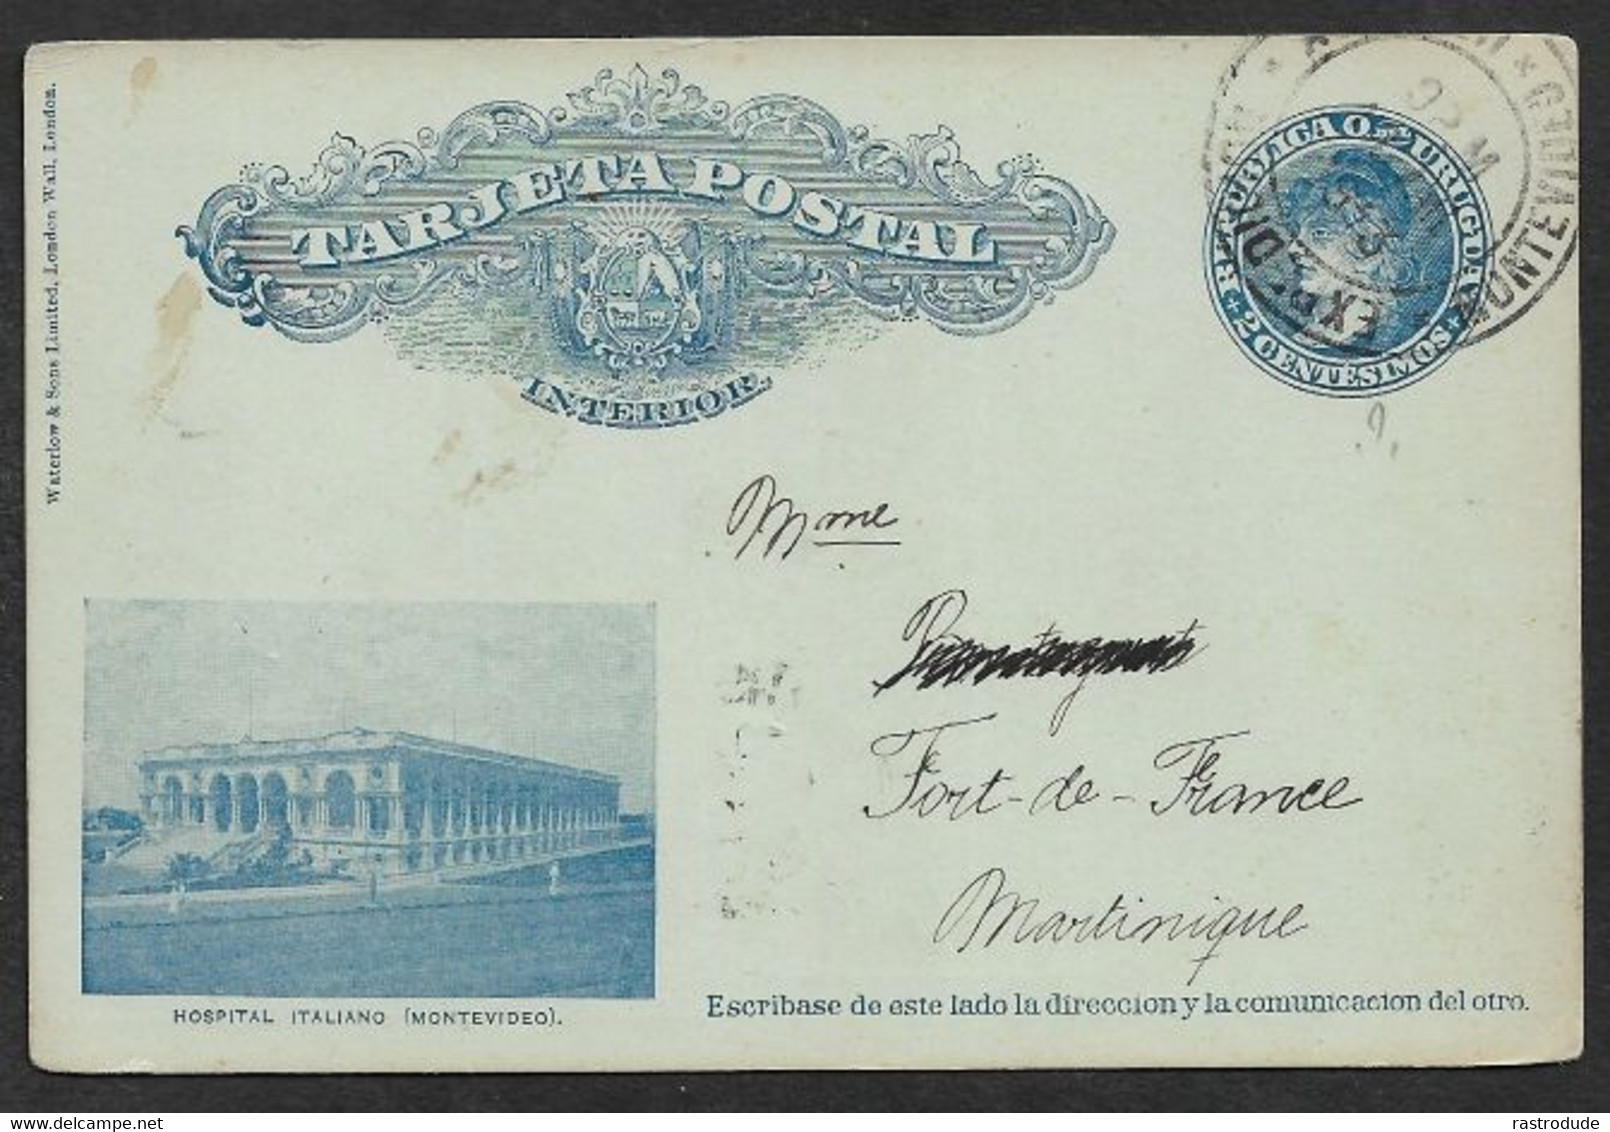 1913 URUGUAY - ILLUSTRATED 2C POSTAL STATIONERY CARD MONTEVIDEO To MARTINIQUE - RARE DESTINATION - Uruguay